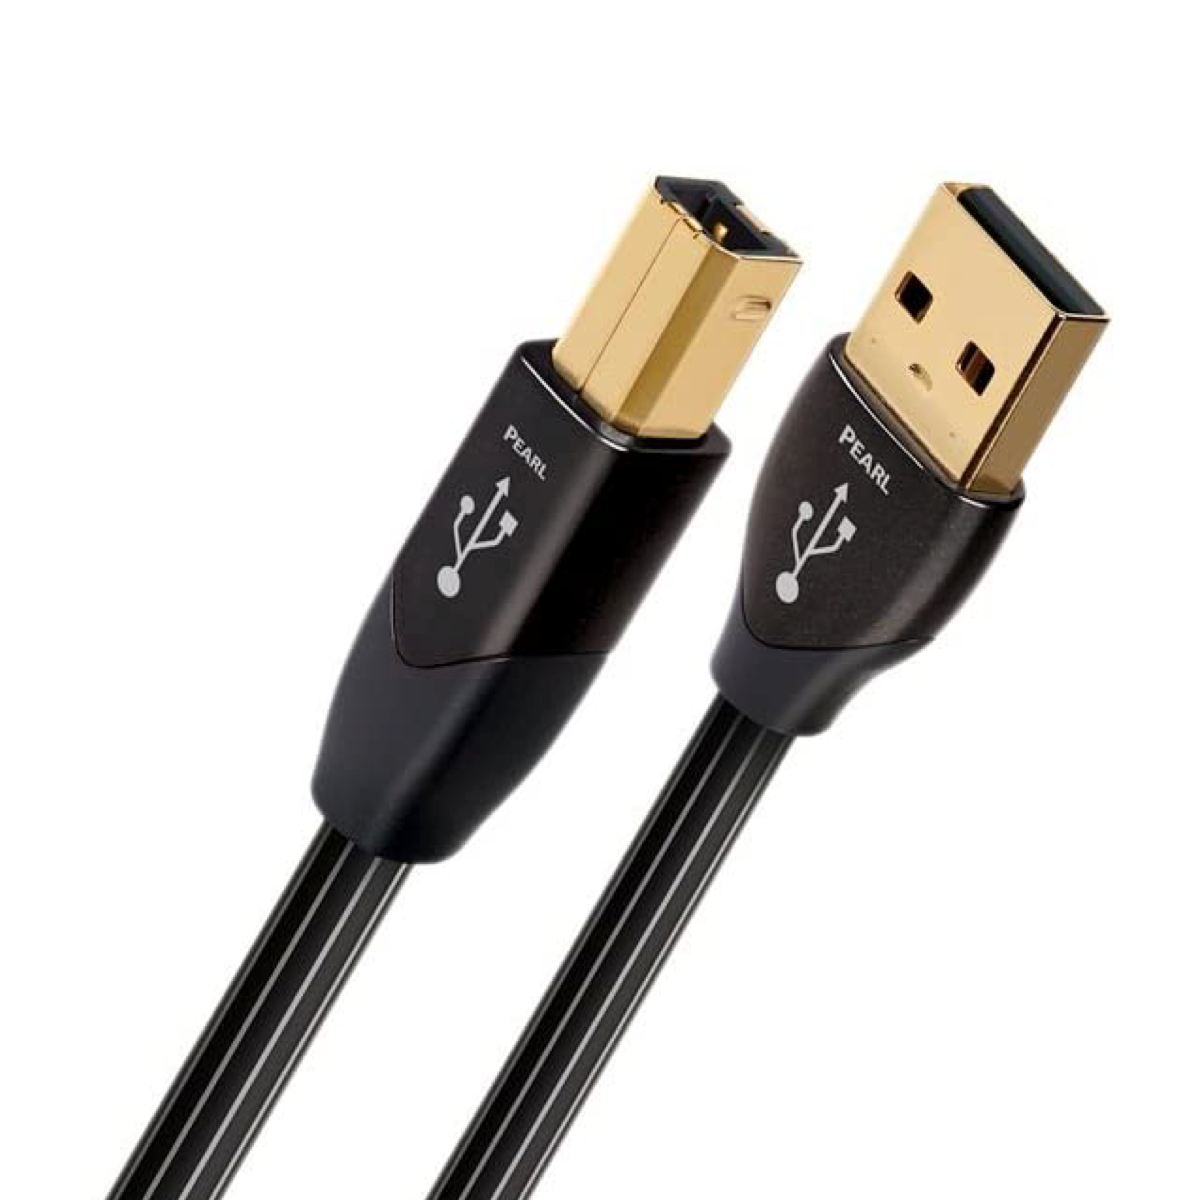 AudioQuest Pearl USB A-B Cable - AVStore